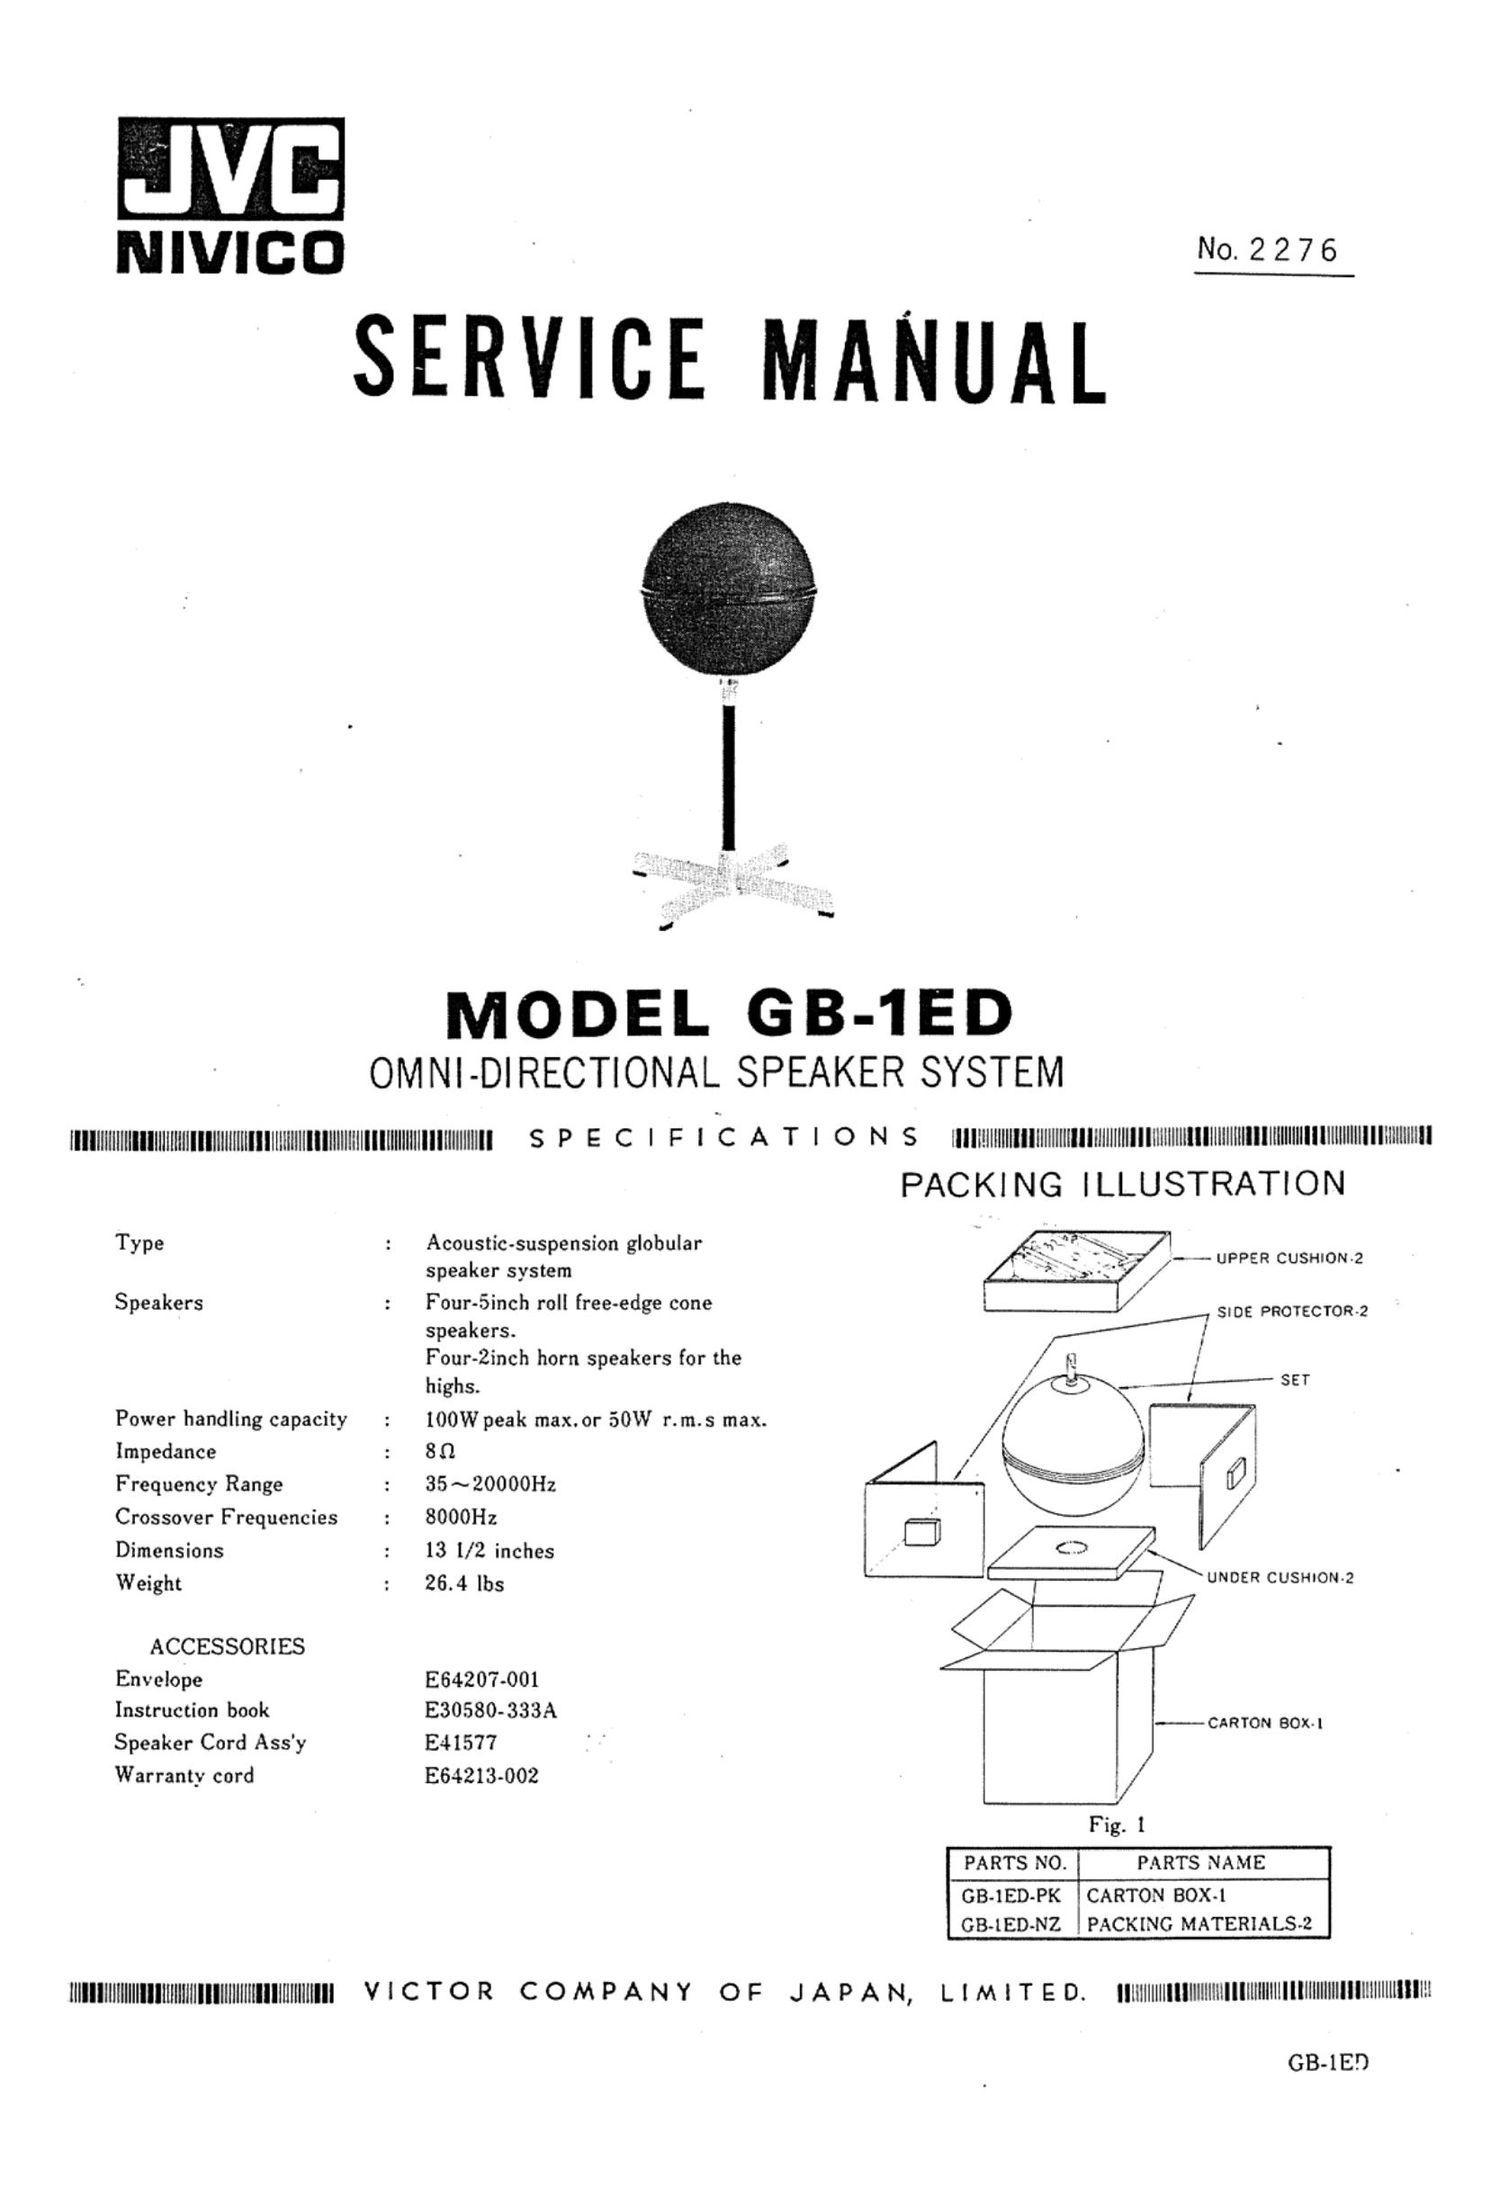 Jvc GB 1 ED Service Manual